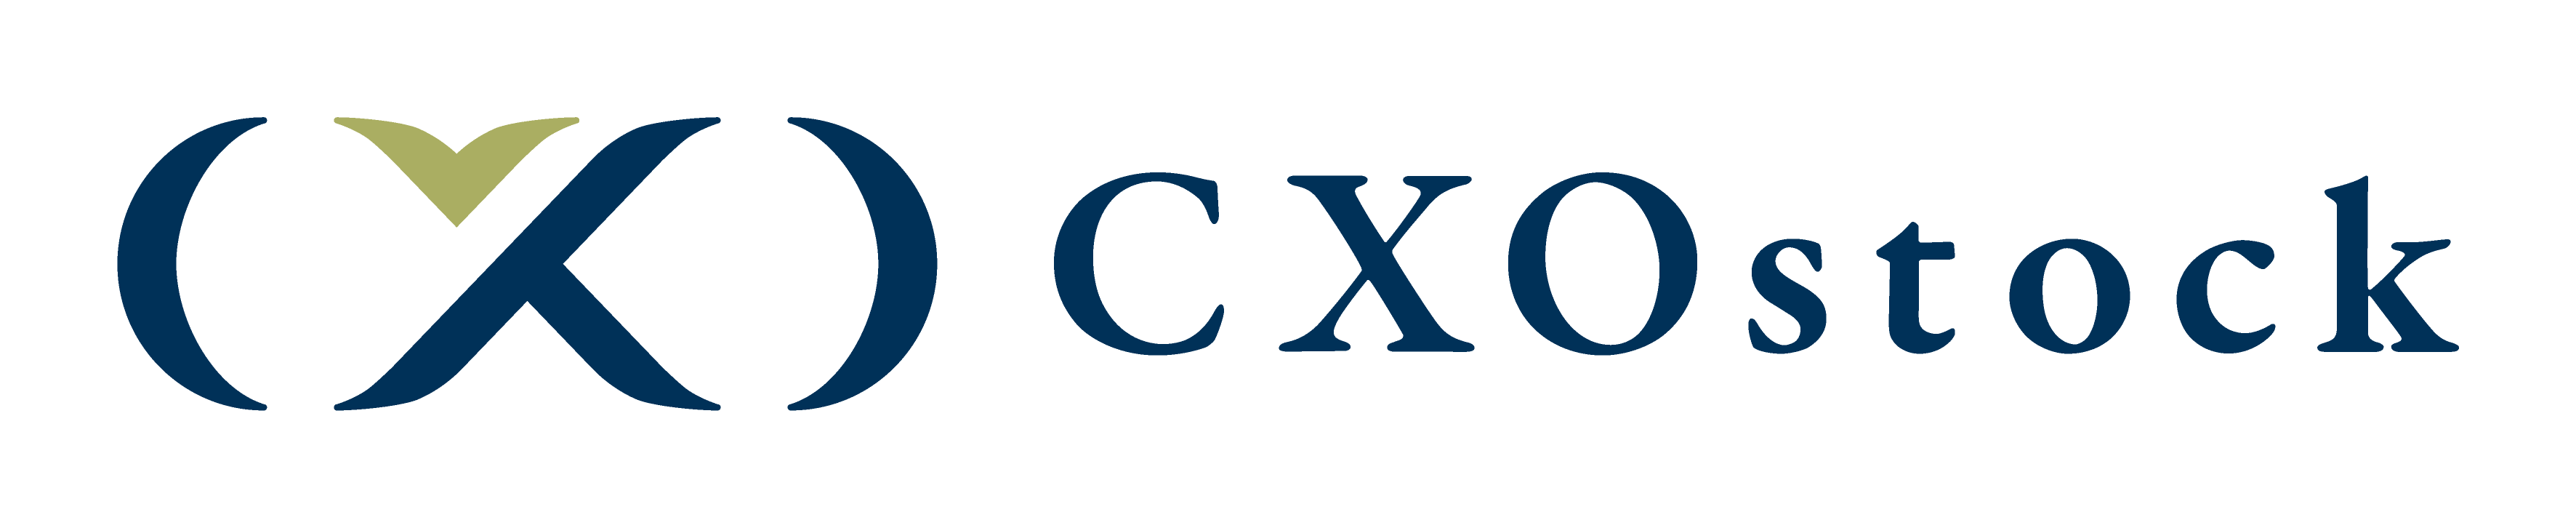 CXO stock